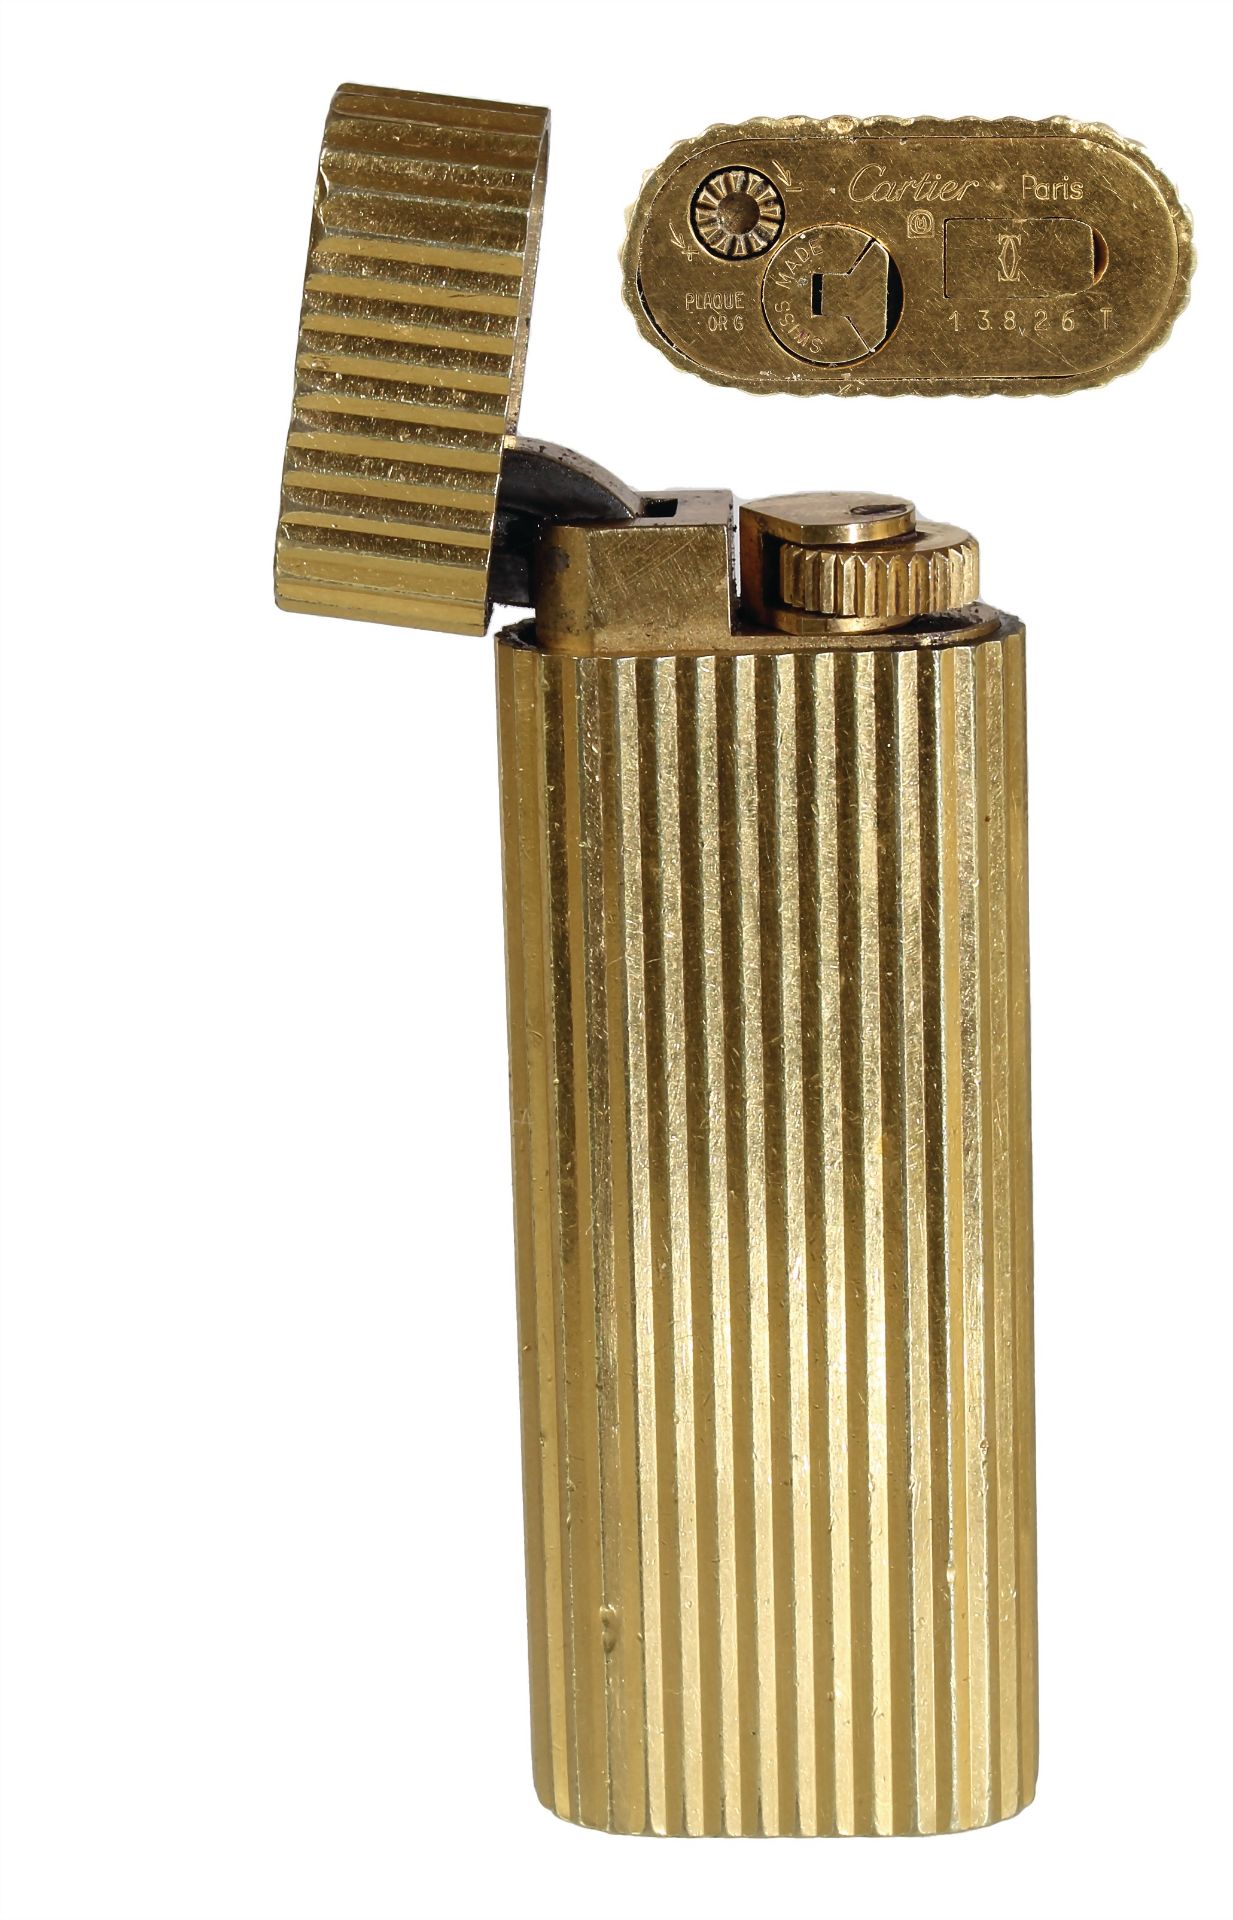 Gas-Feuerzeug, VINTAGE, CARTIER Paris SWISS MADE, vergoldet, N° 1 38 26 T, L = 70,0 mm, ...